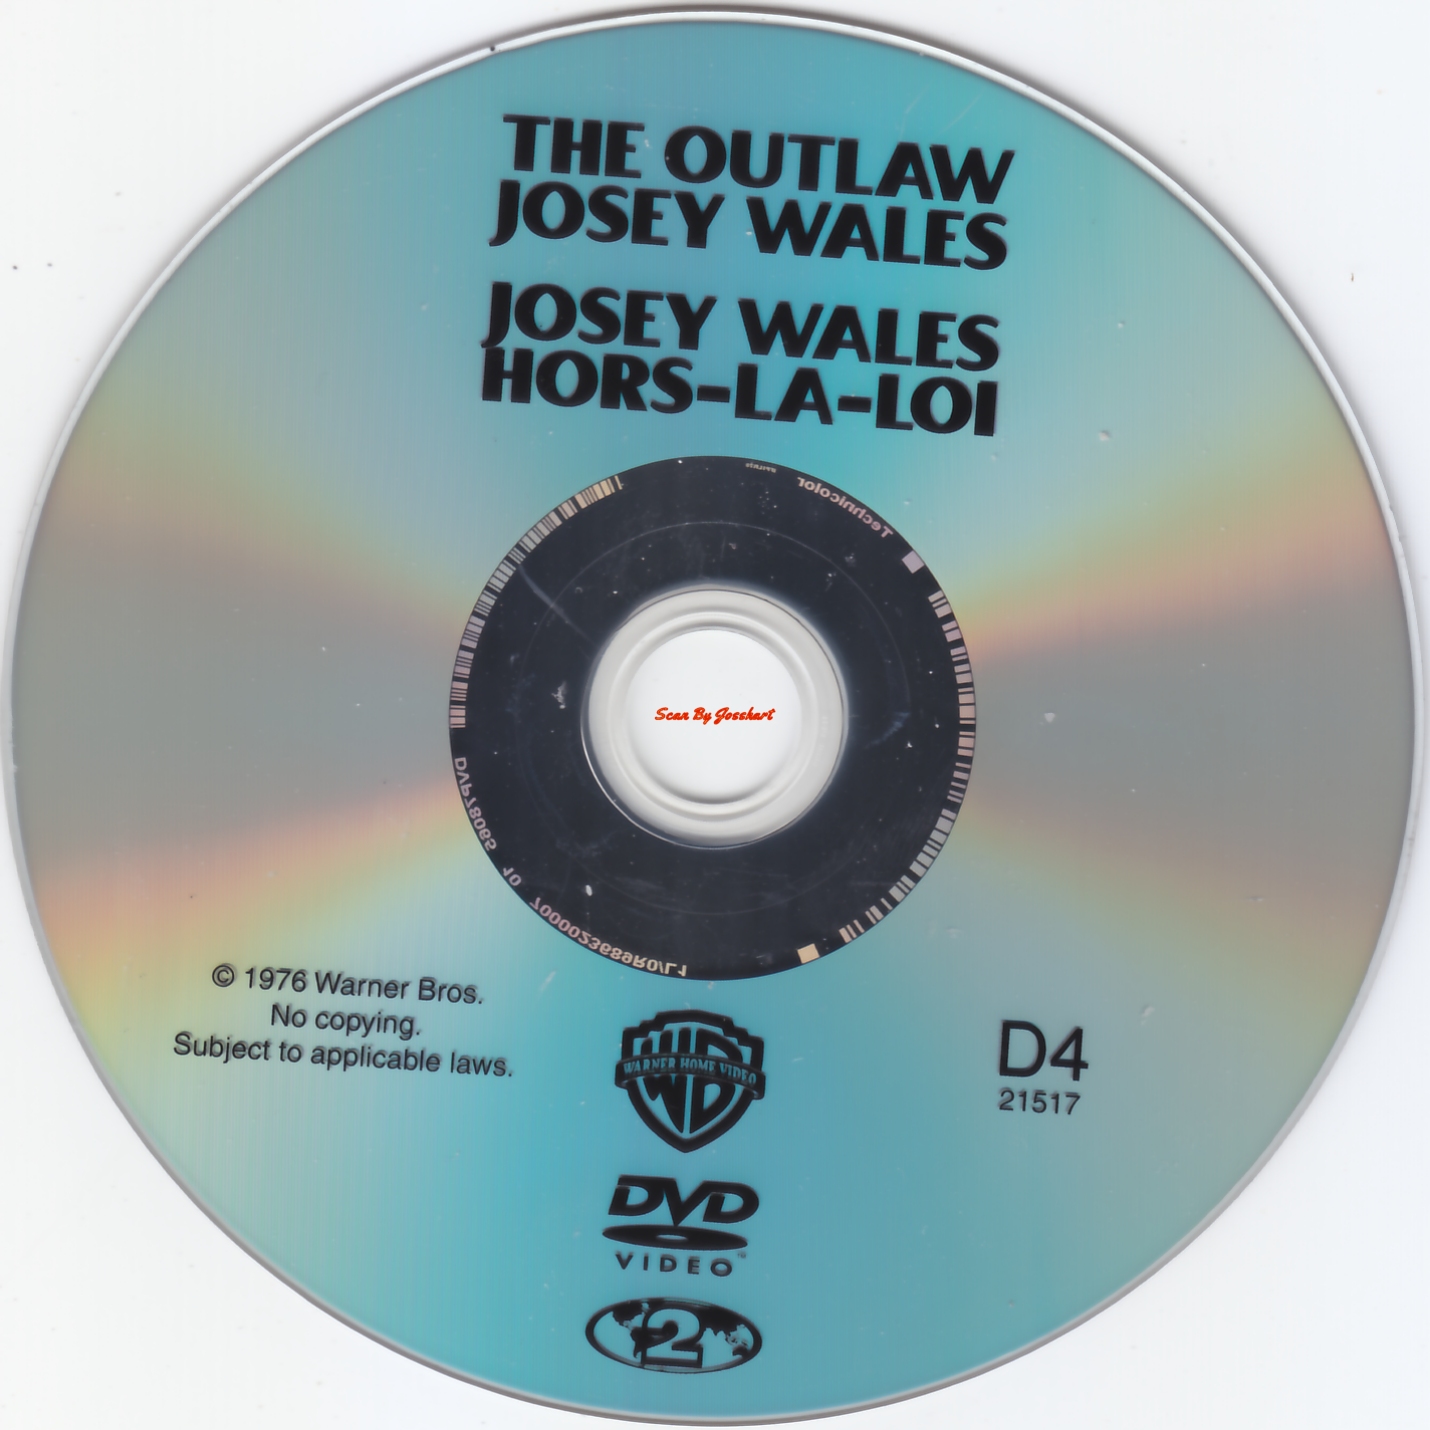 Josey Wales hors la loi v2